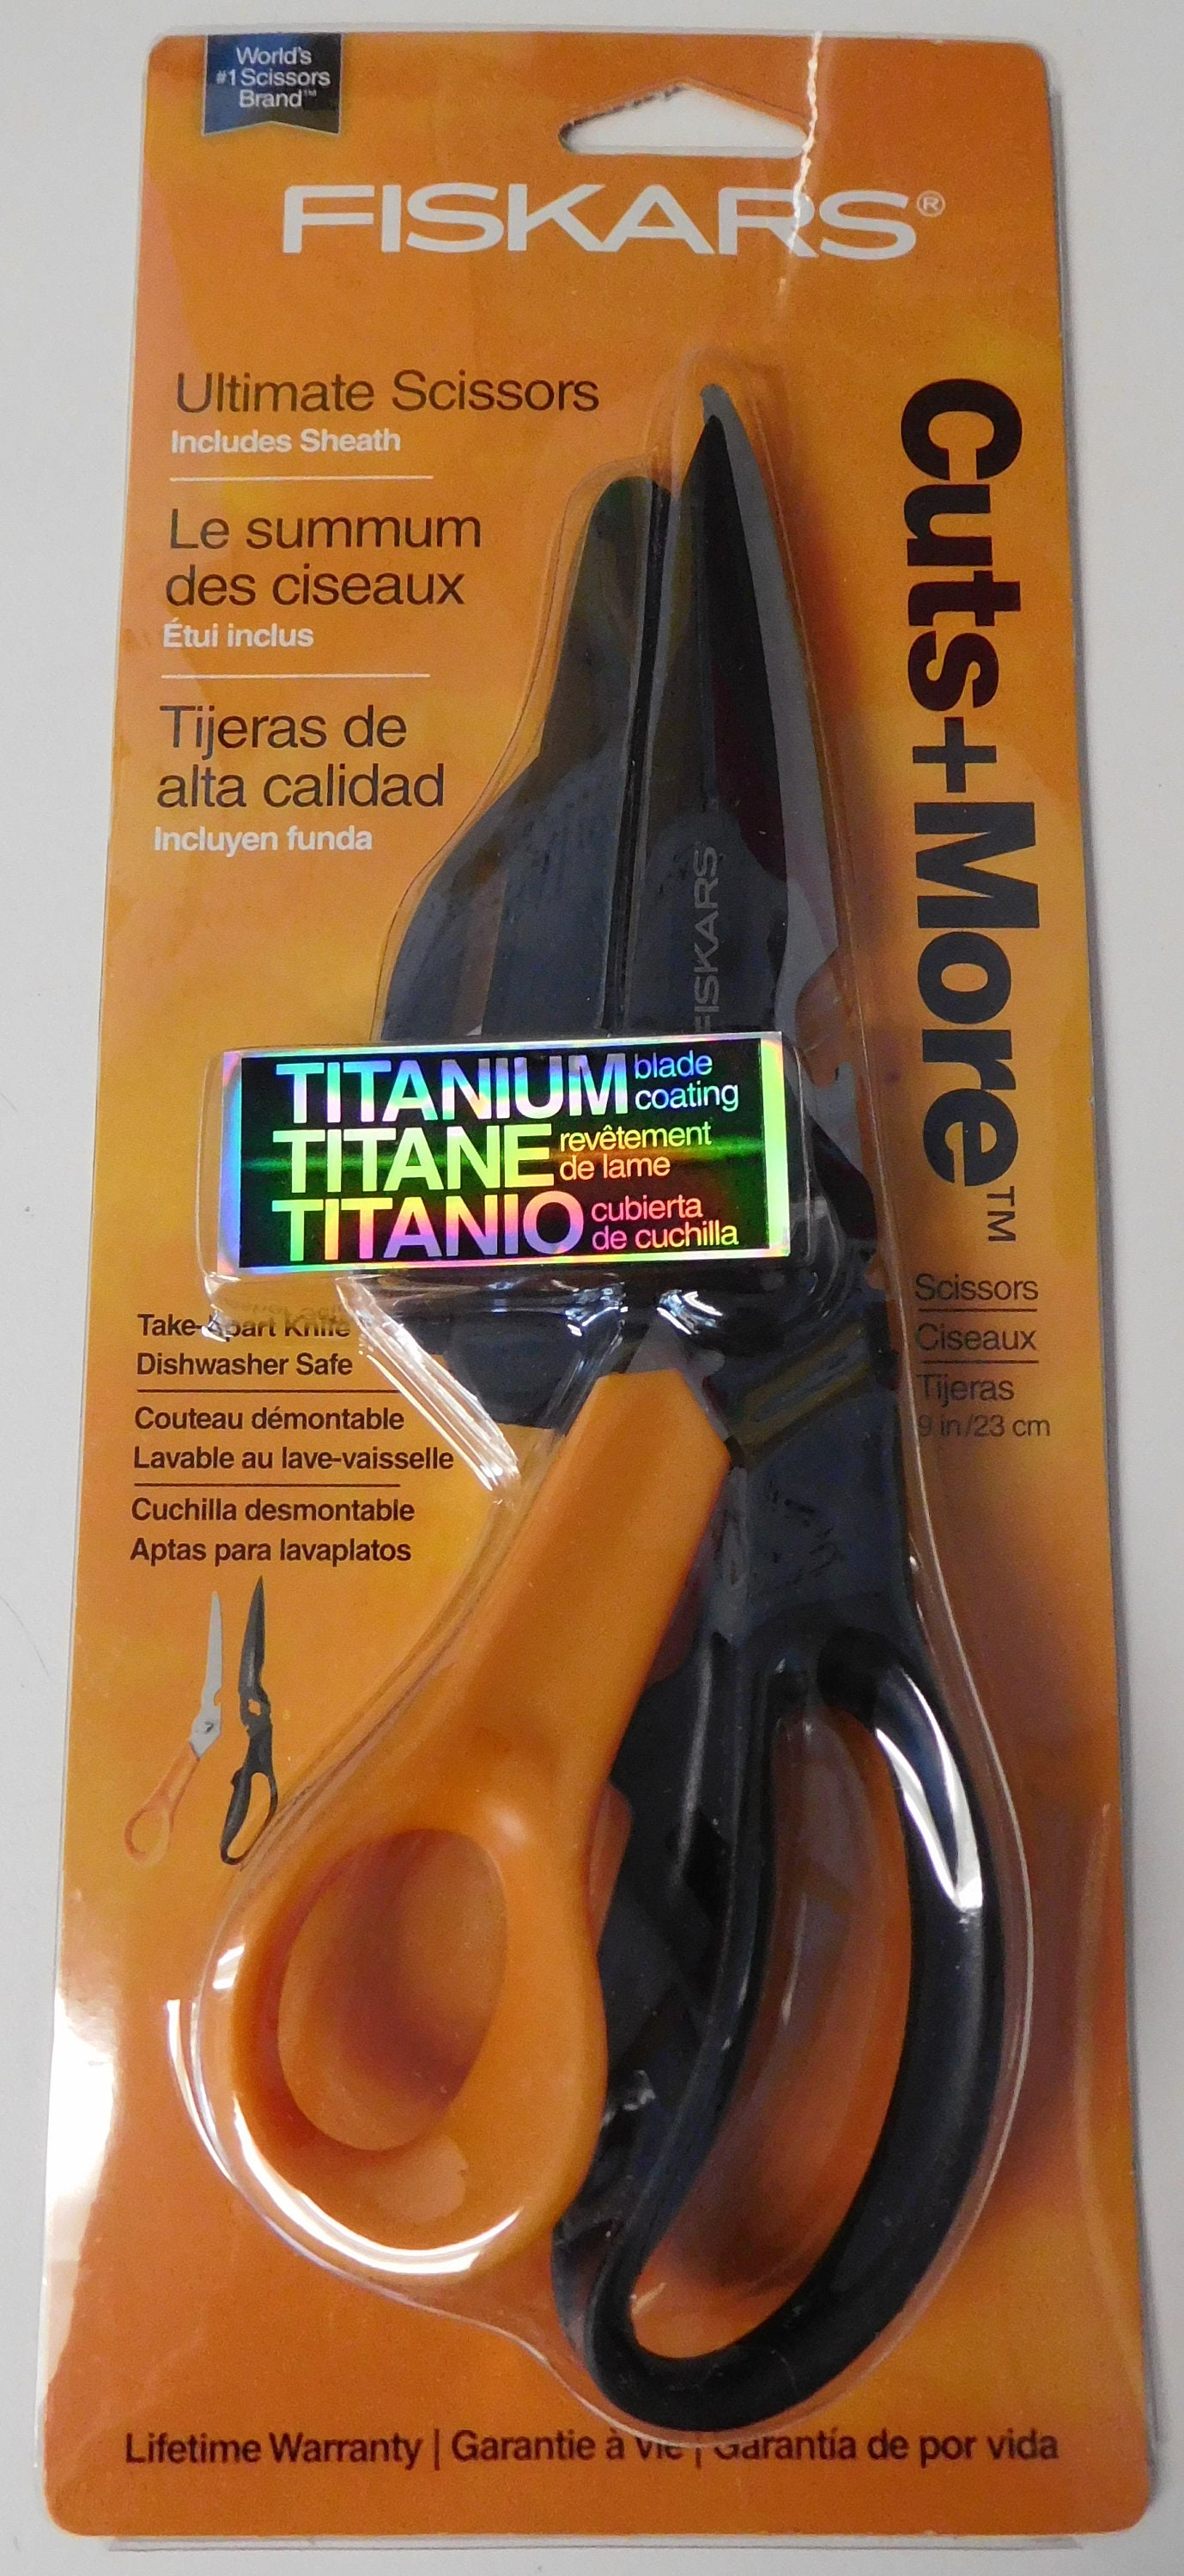  Tim Holtz Small Titanium Scissors - 7 Inch Mini Snips